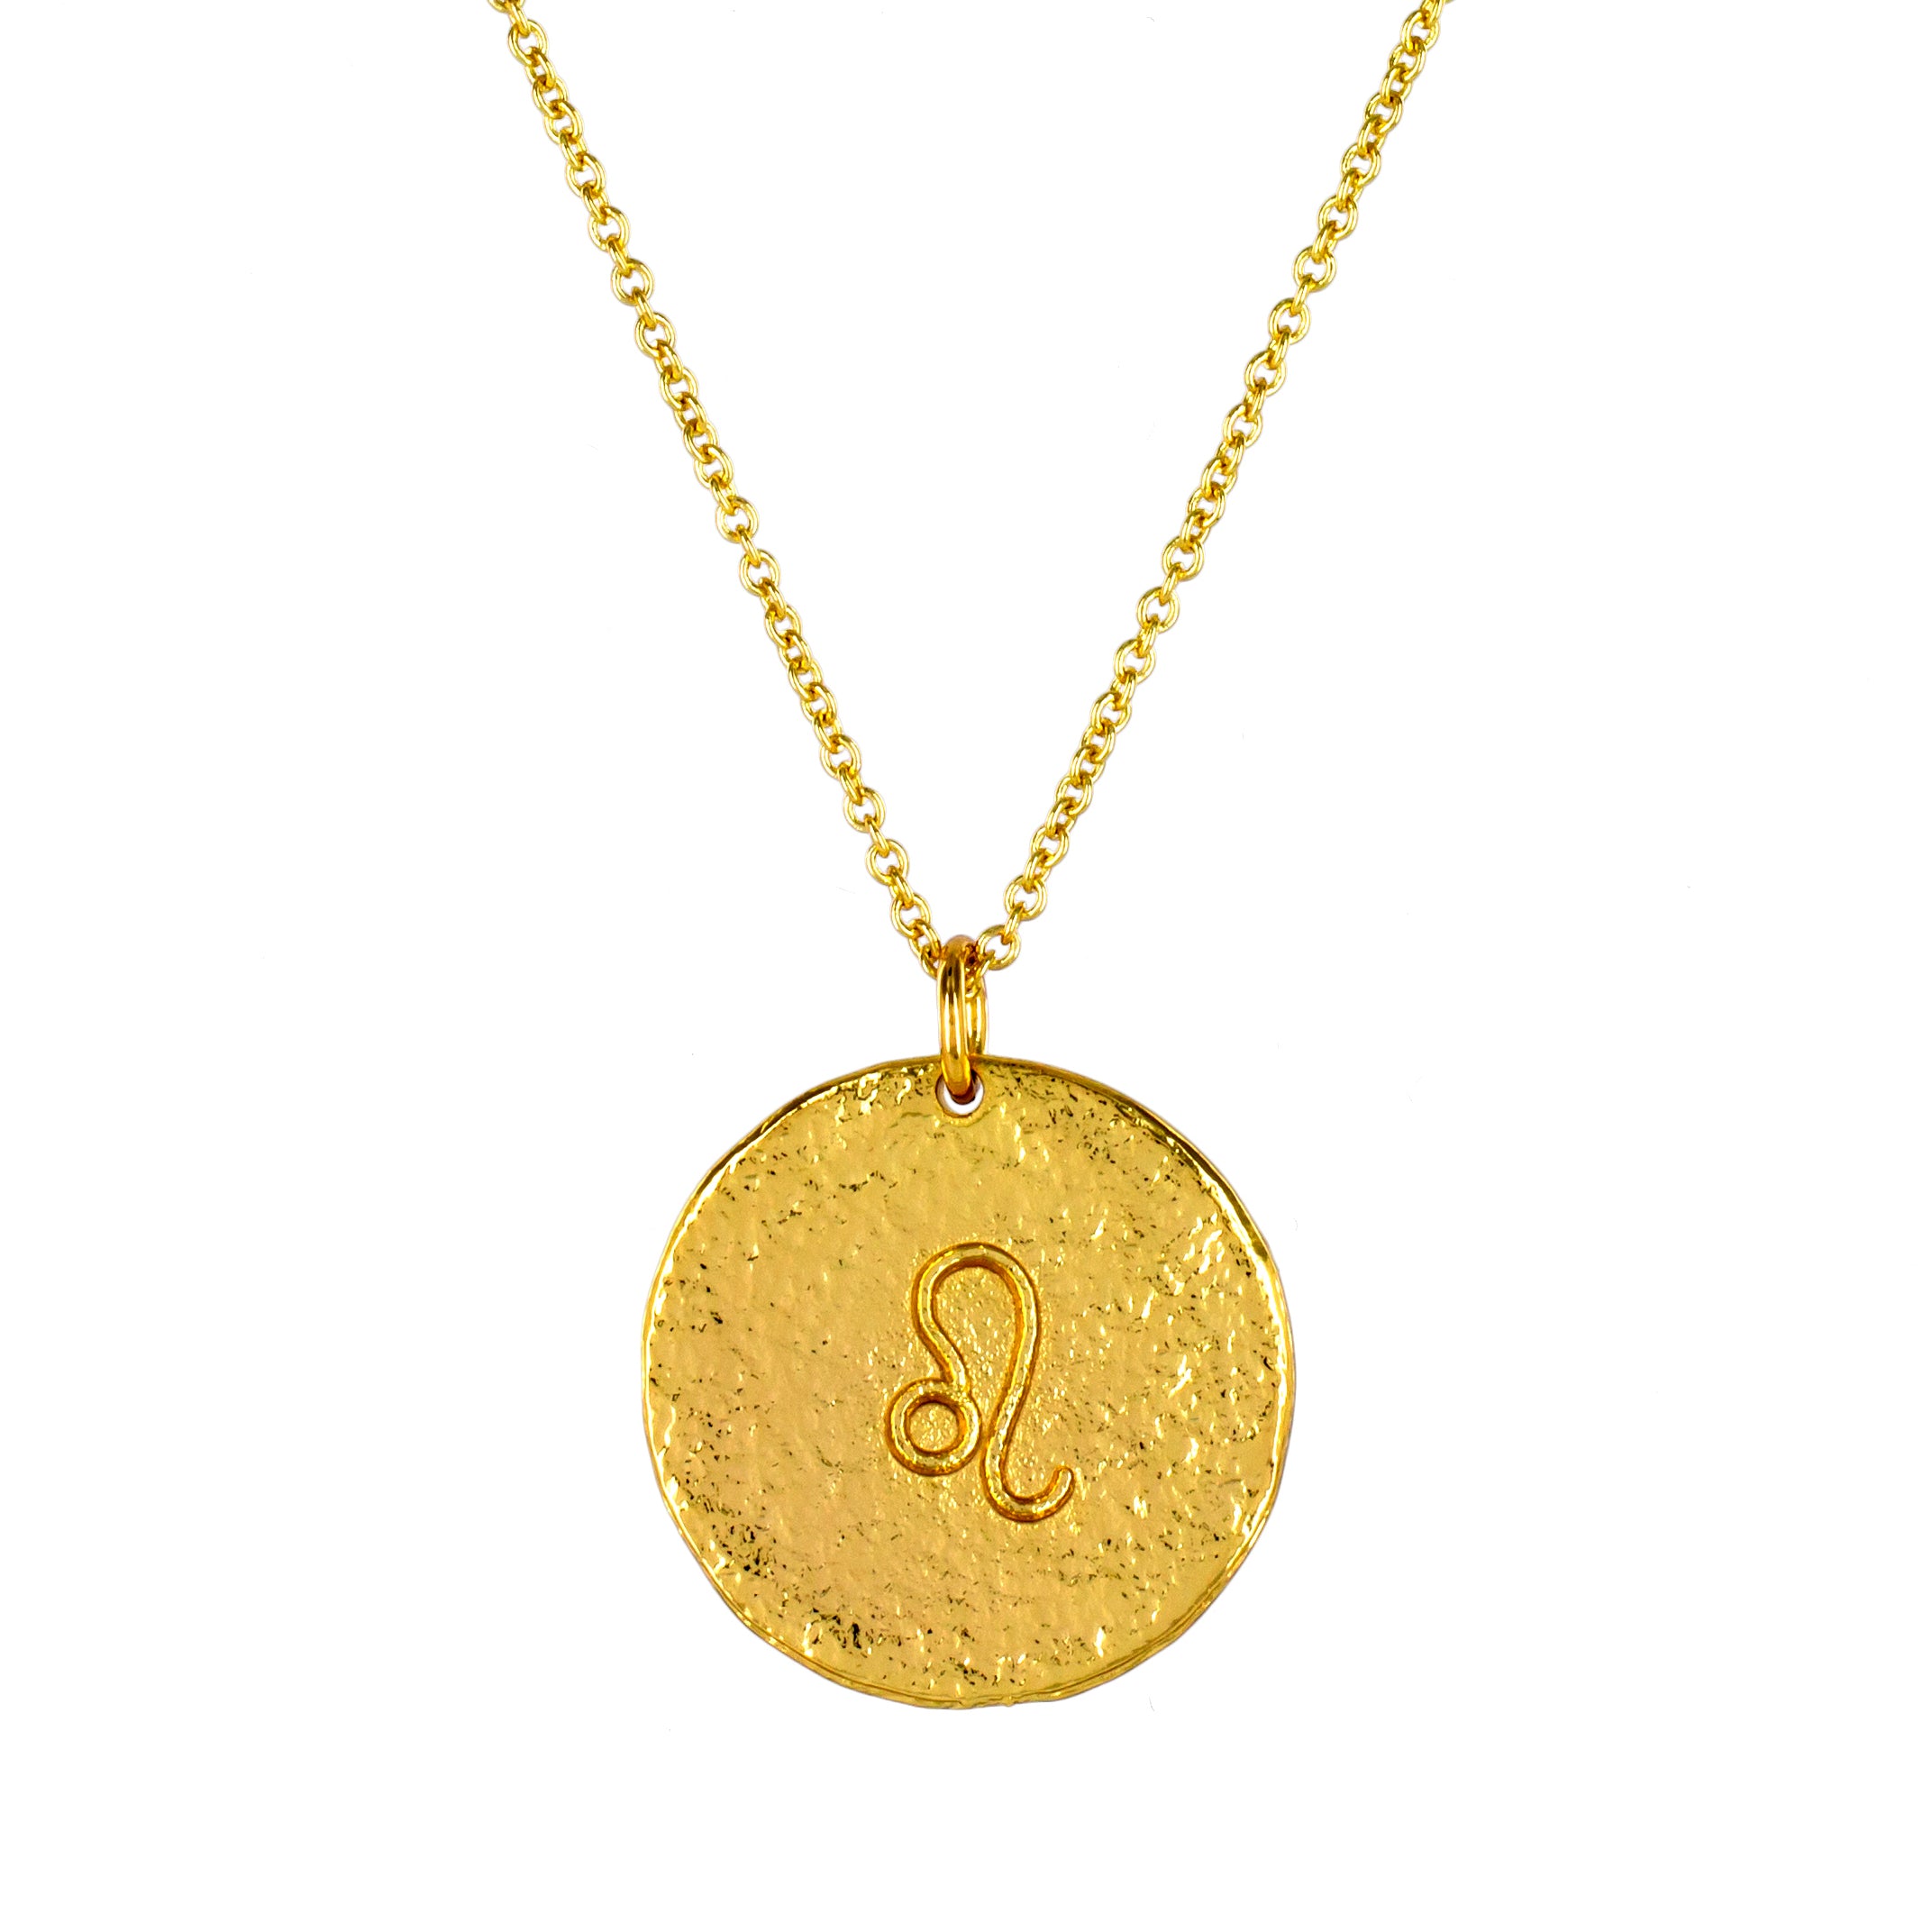 astrologie collier lion- astrodisiac - bijoux - paris - claire naa - jewels - necklace leo - astrology